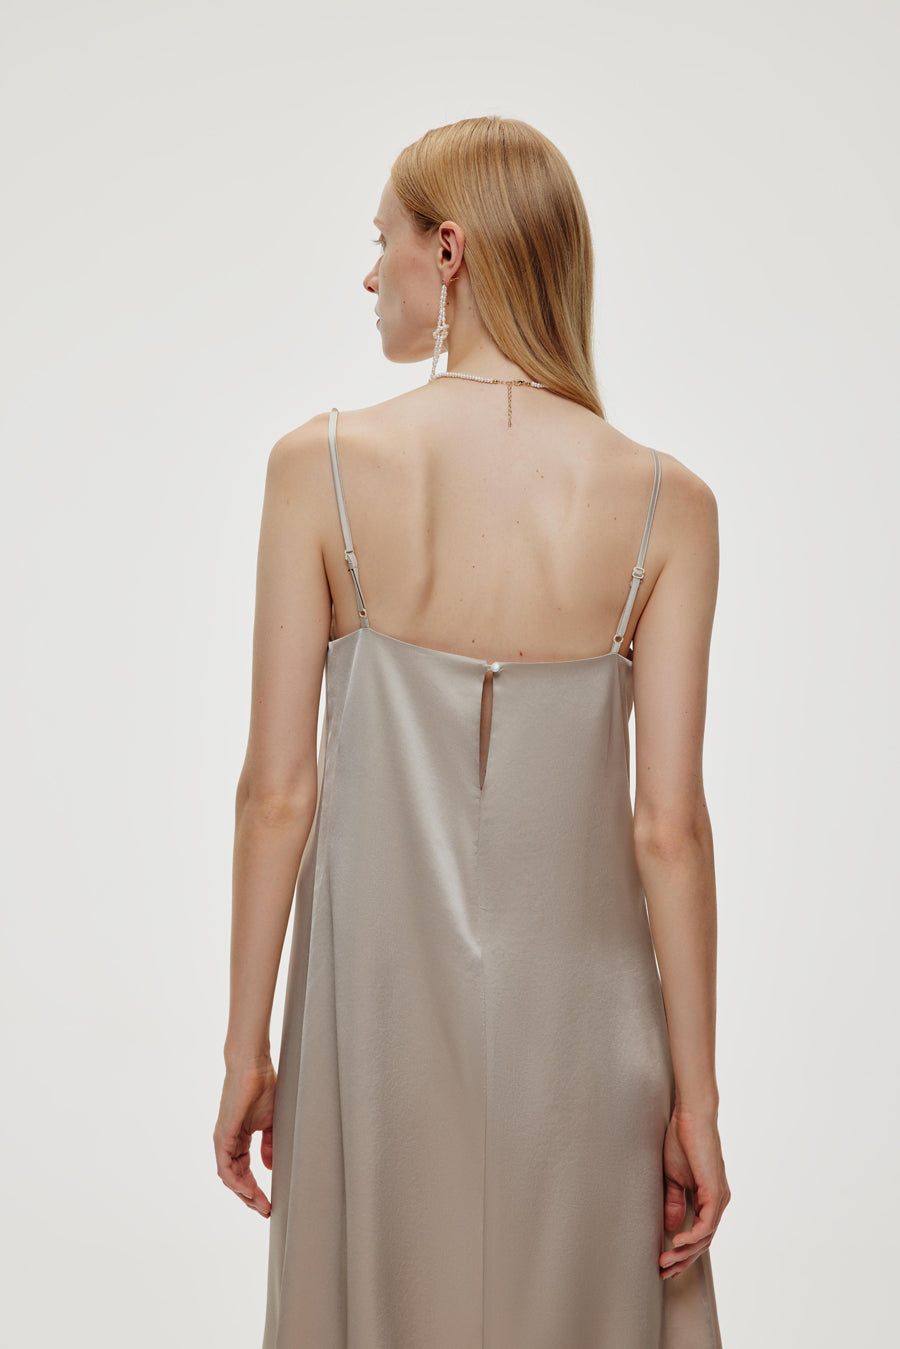 NomadBasic Women's Pearlescent Satin Calf-Length Strap Dress